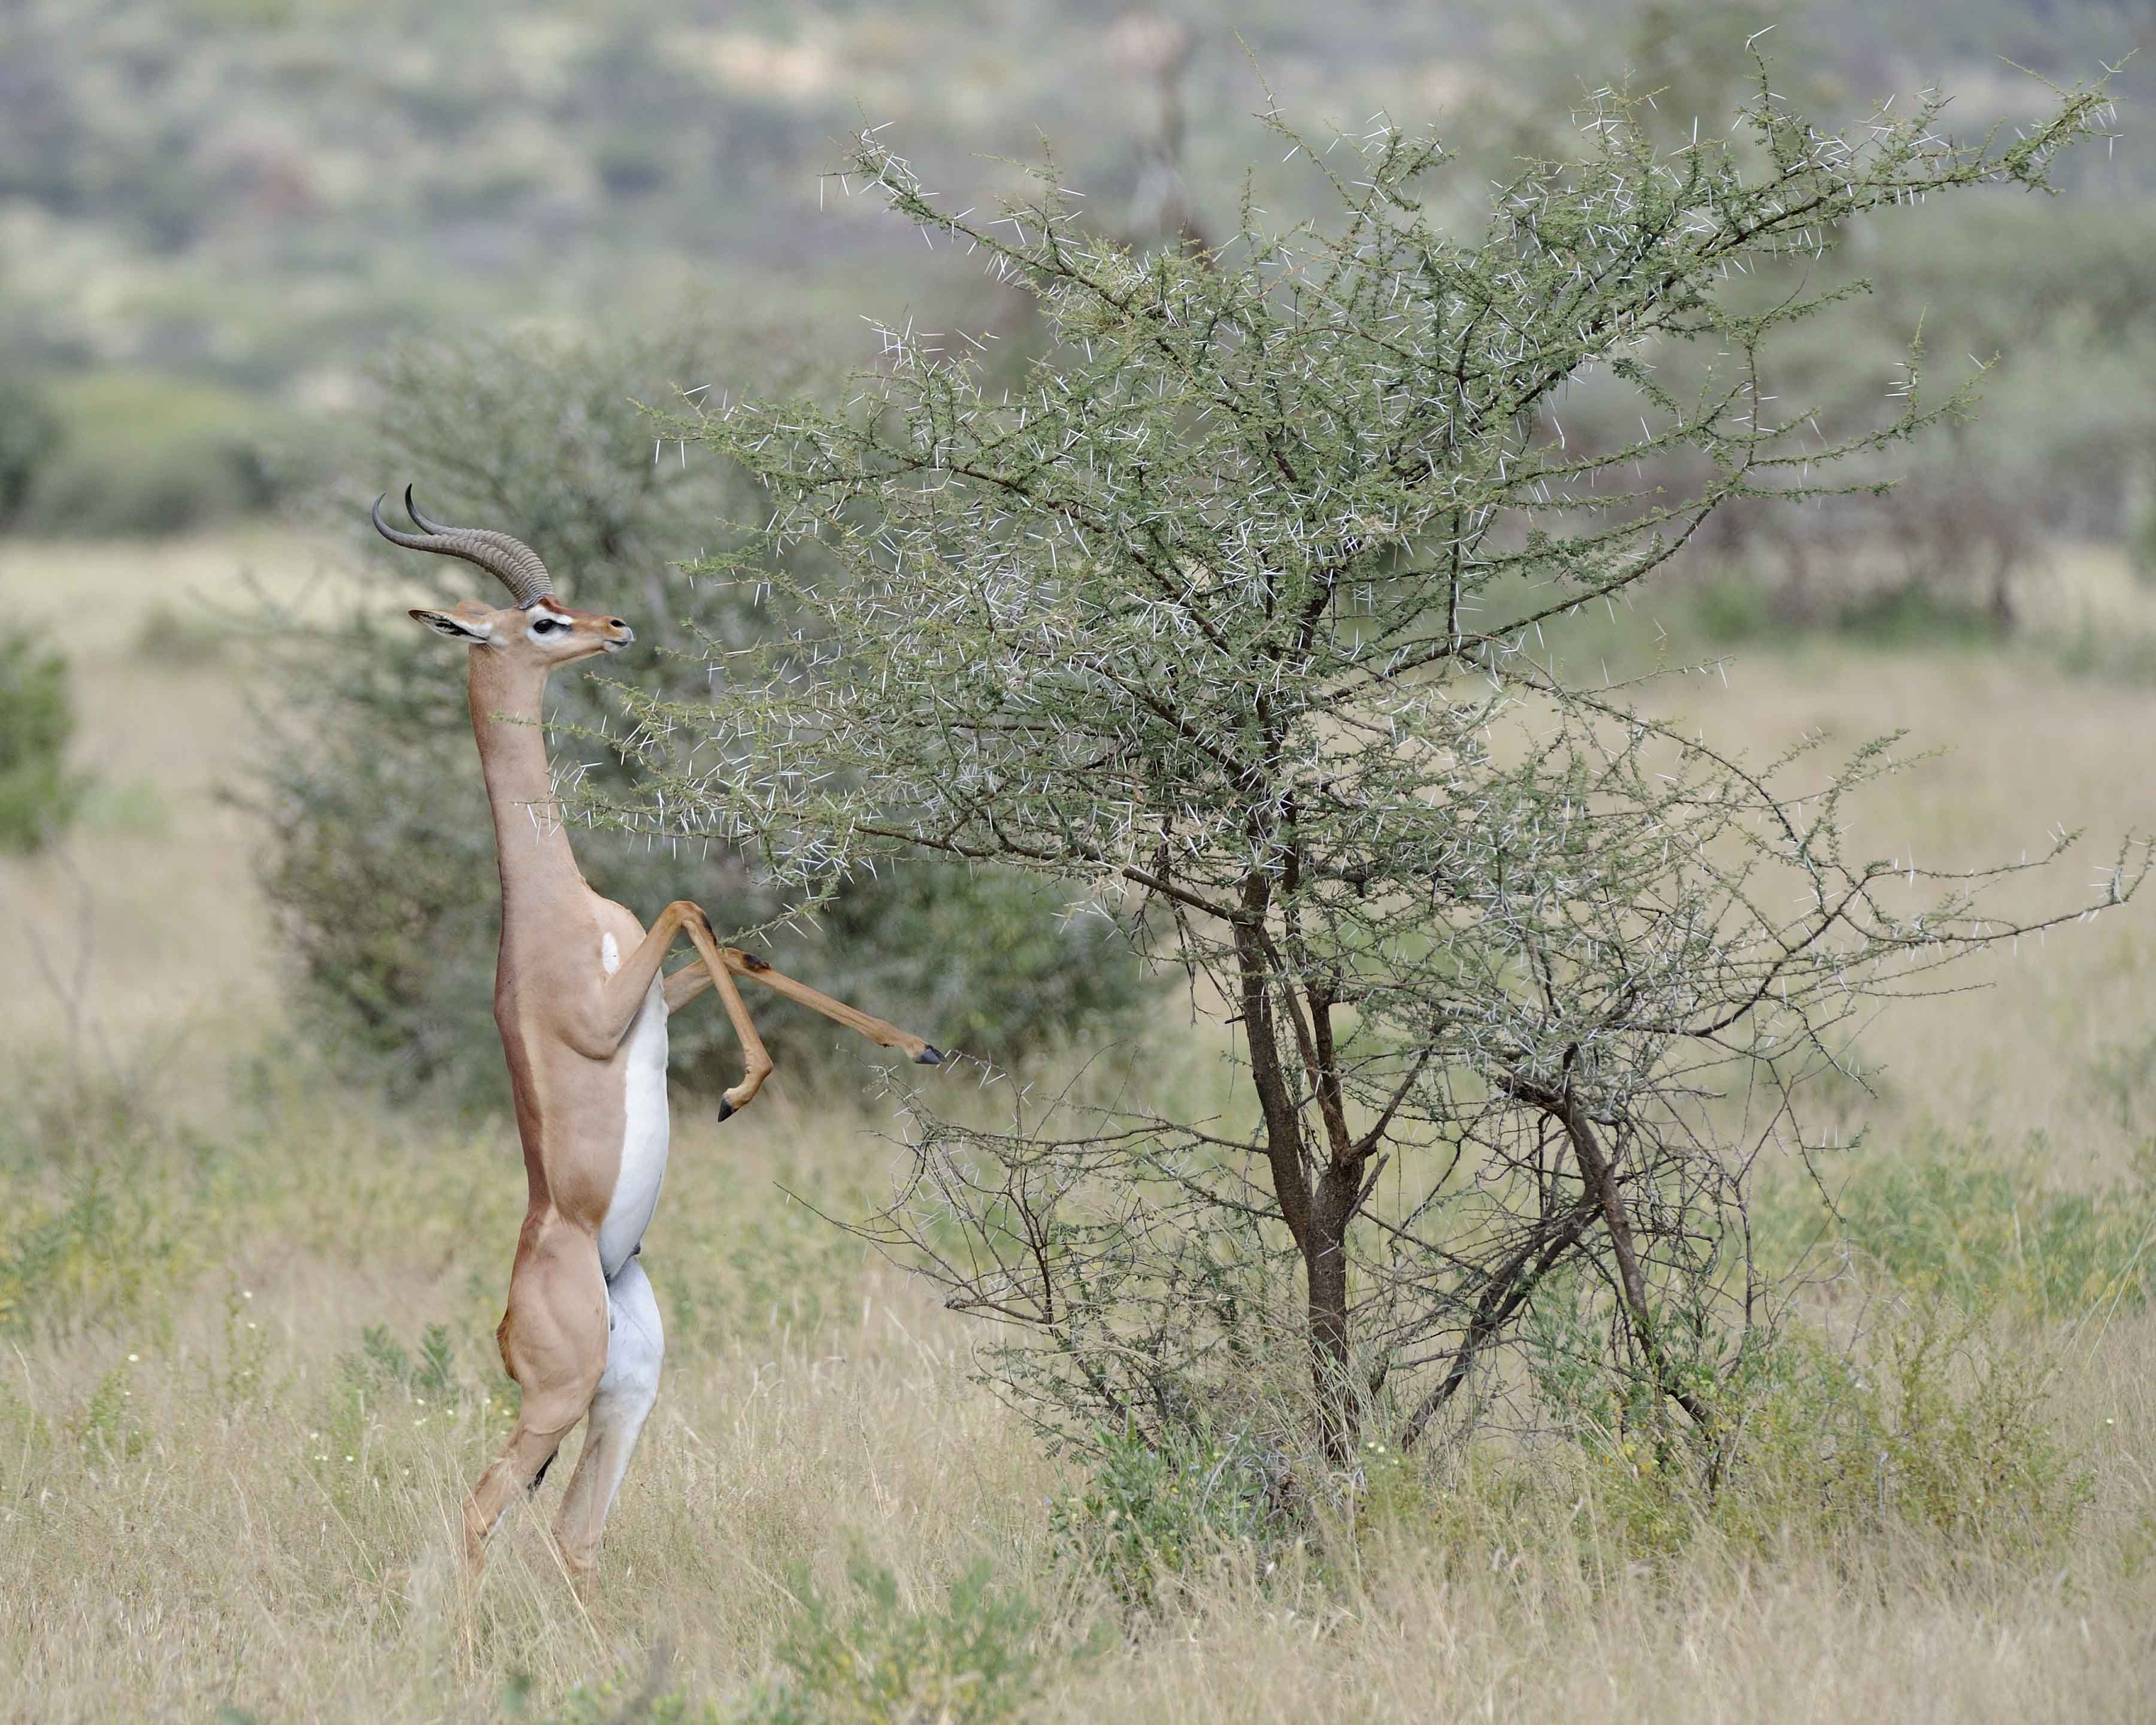 Gerenuk, on hind legs-010813-Samburu National Reserve, Kenya-#2208.jpg